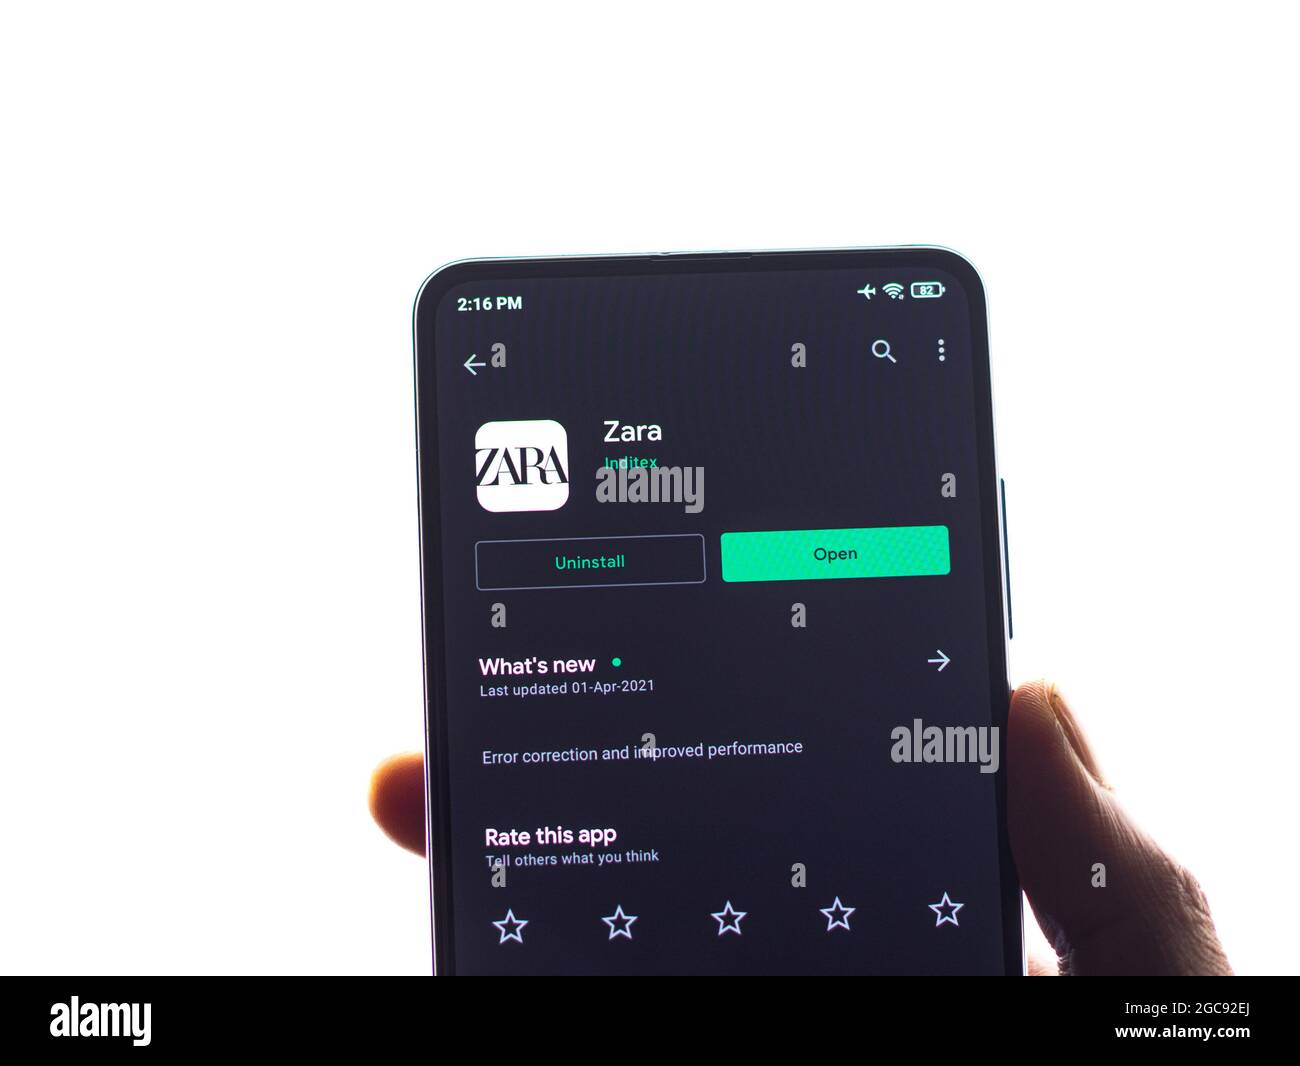 Assam, India - August 6, 2021 : ZARA logo on phone screen stock image Stock  Photo - Alamy